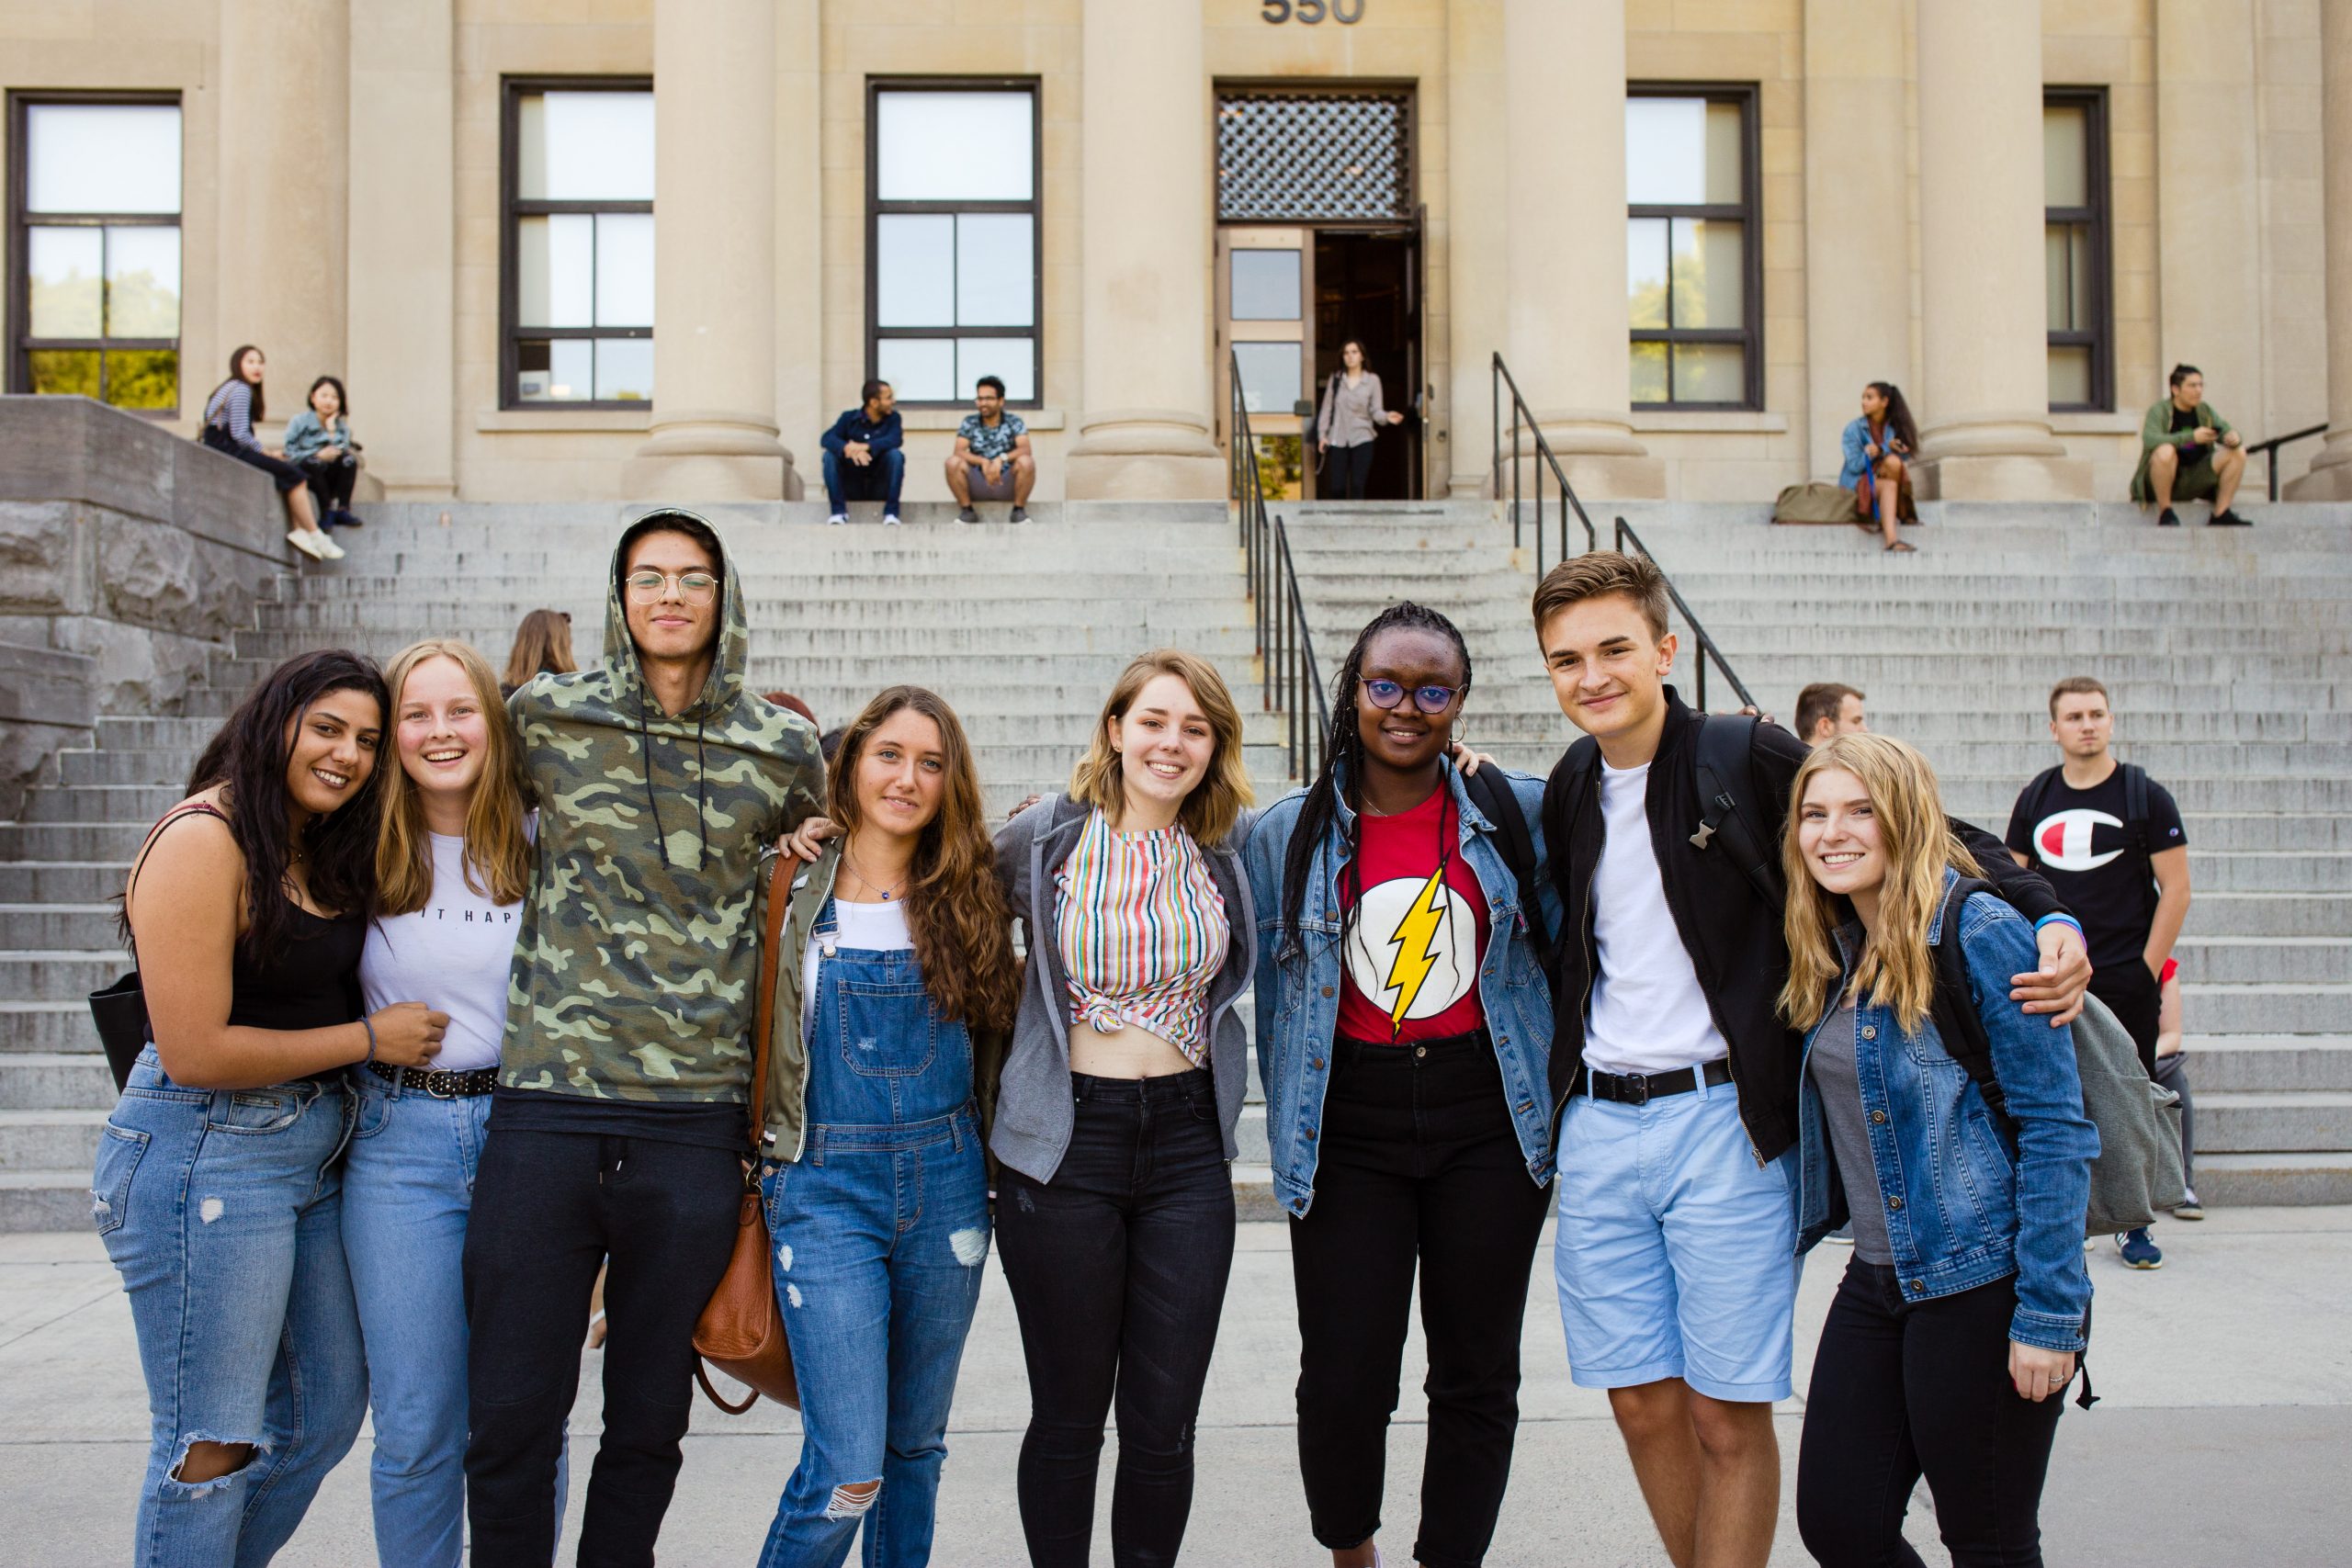 8 University of Ottawa students